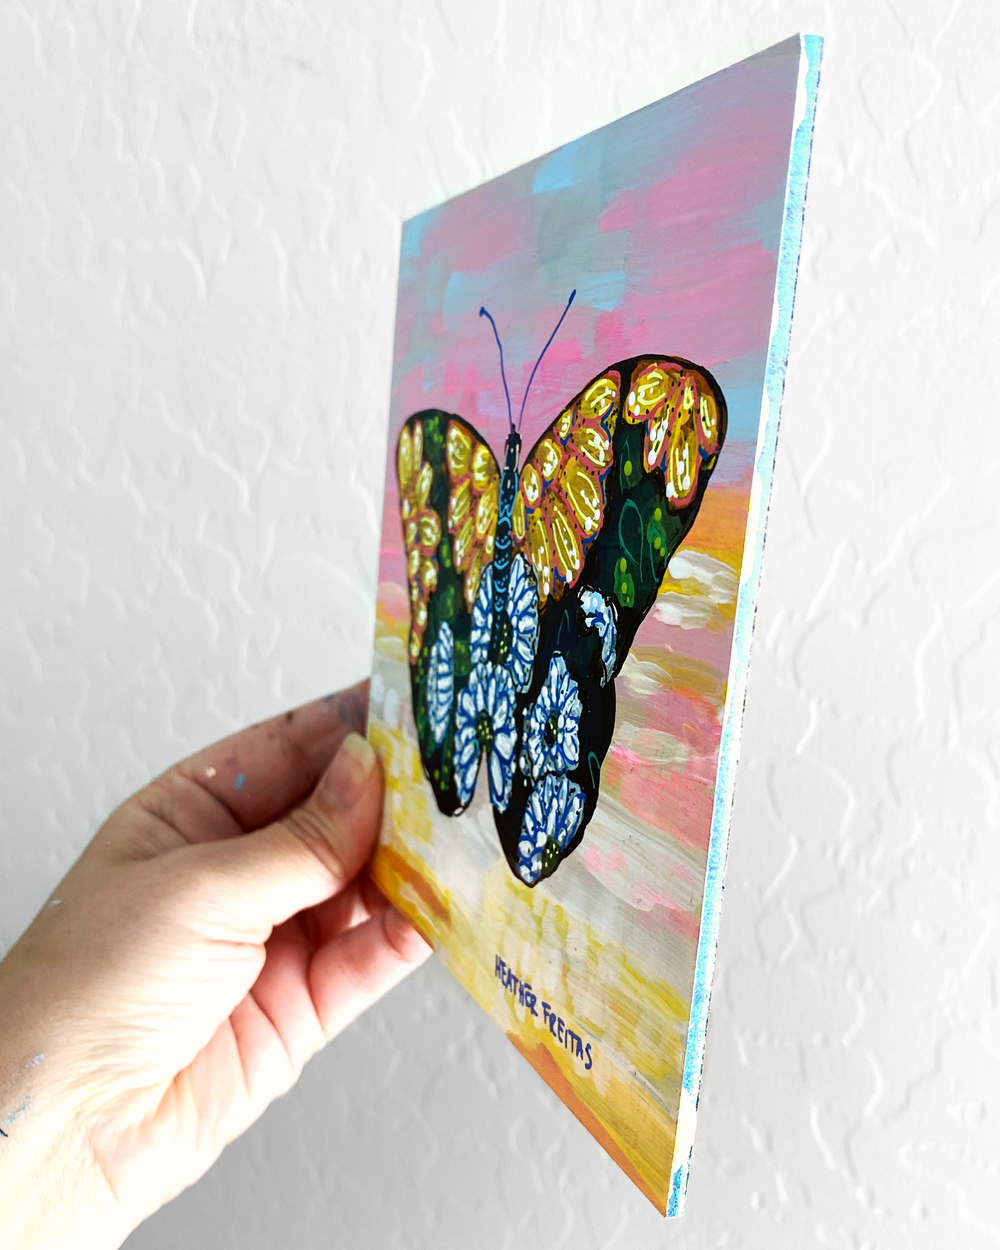 Gerbera Daisy Butterfly ( Original Painting ) - Heather Freitas - fine art home deccor